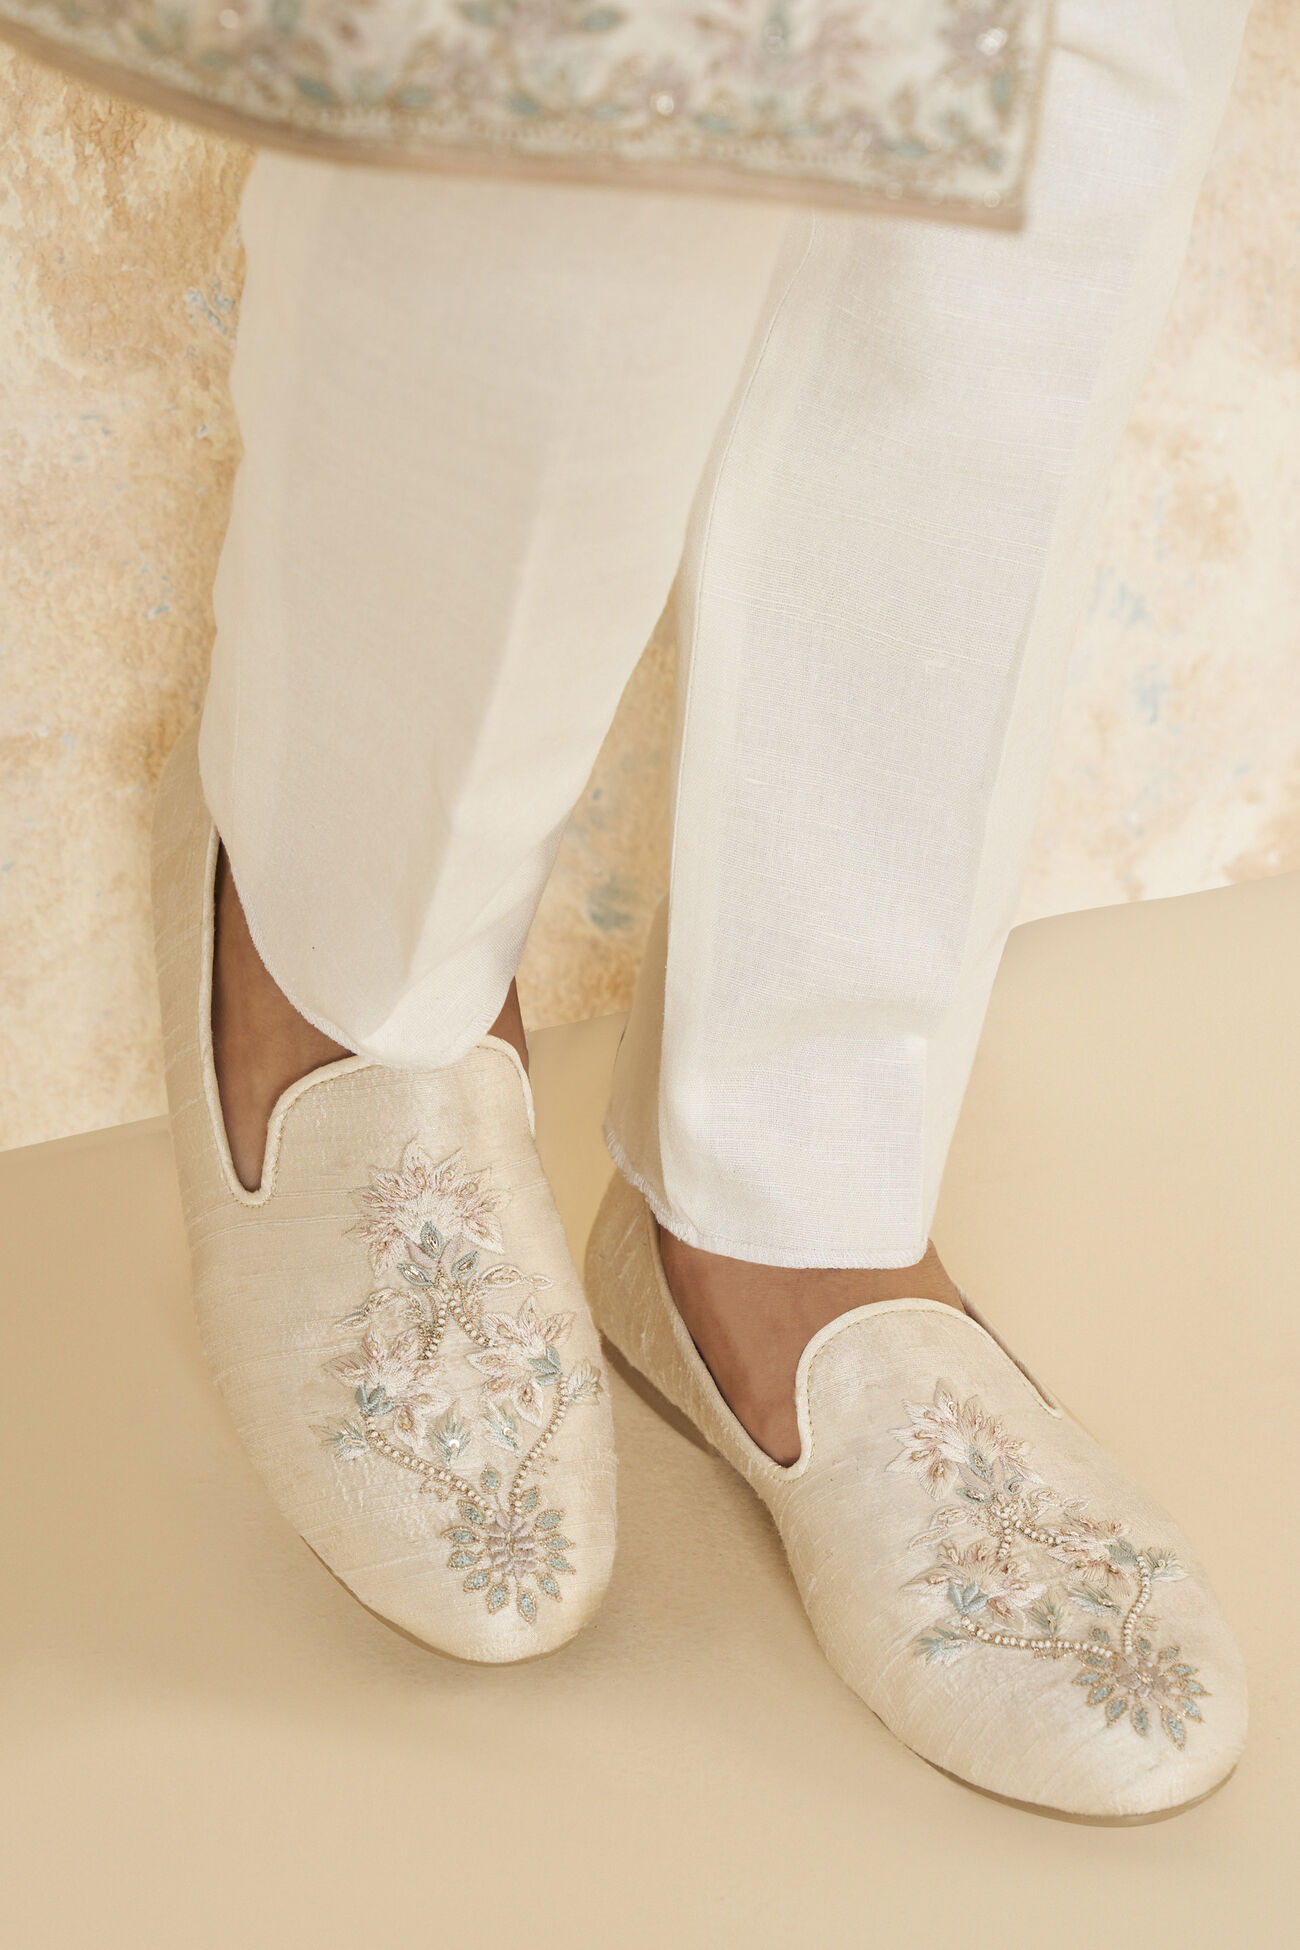 Reham Embroidered Silk Shoes - Ivory, Ivory, image 1